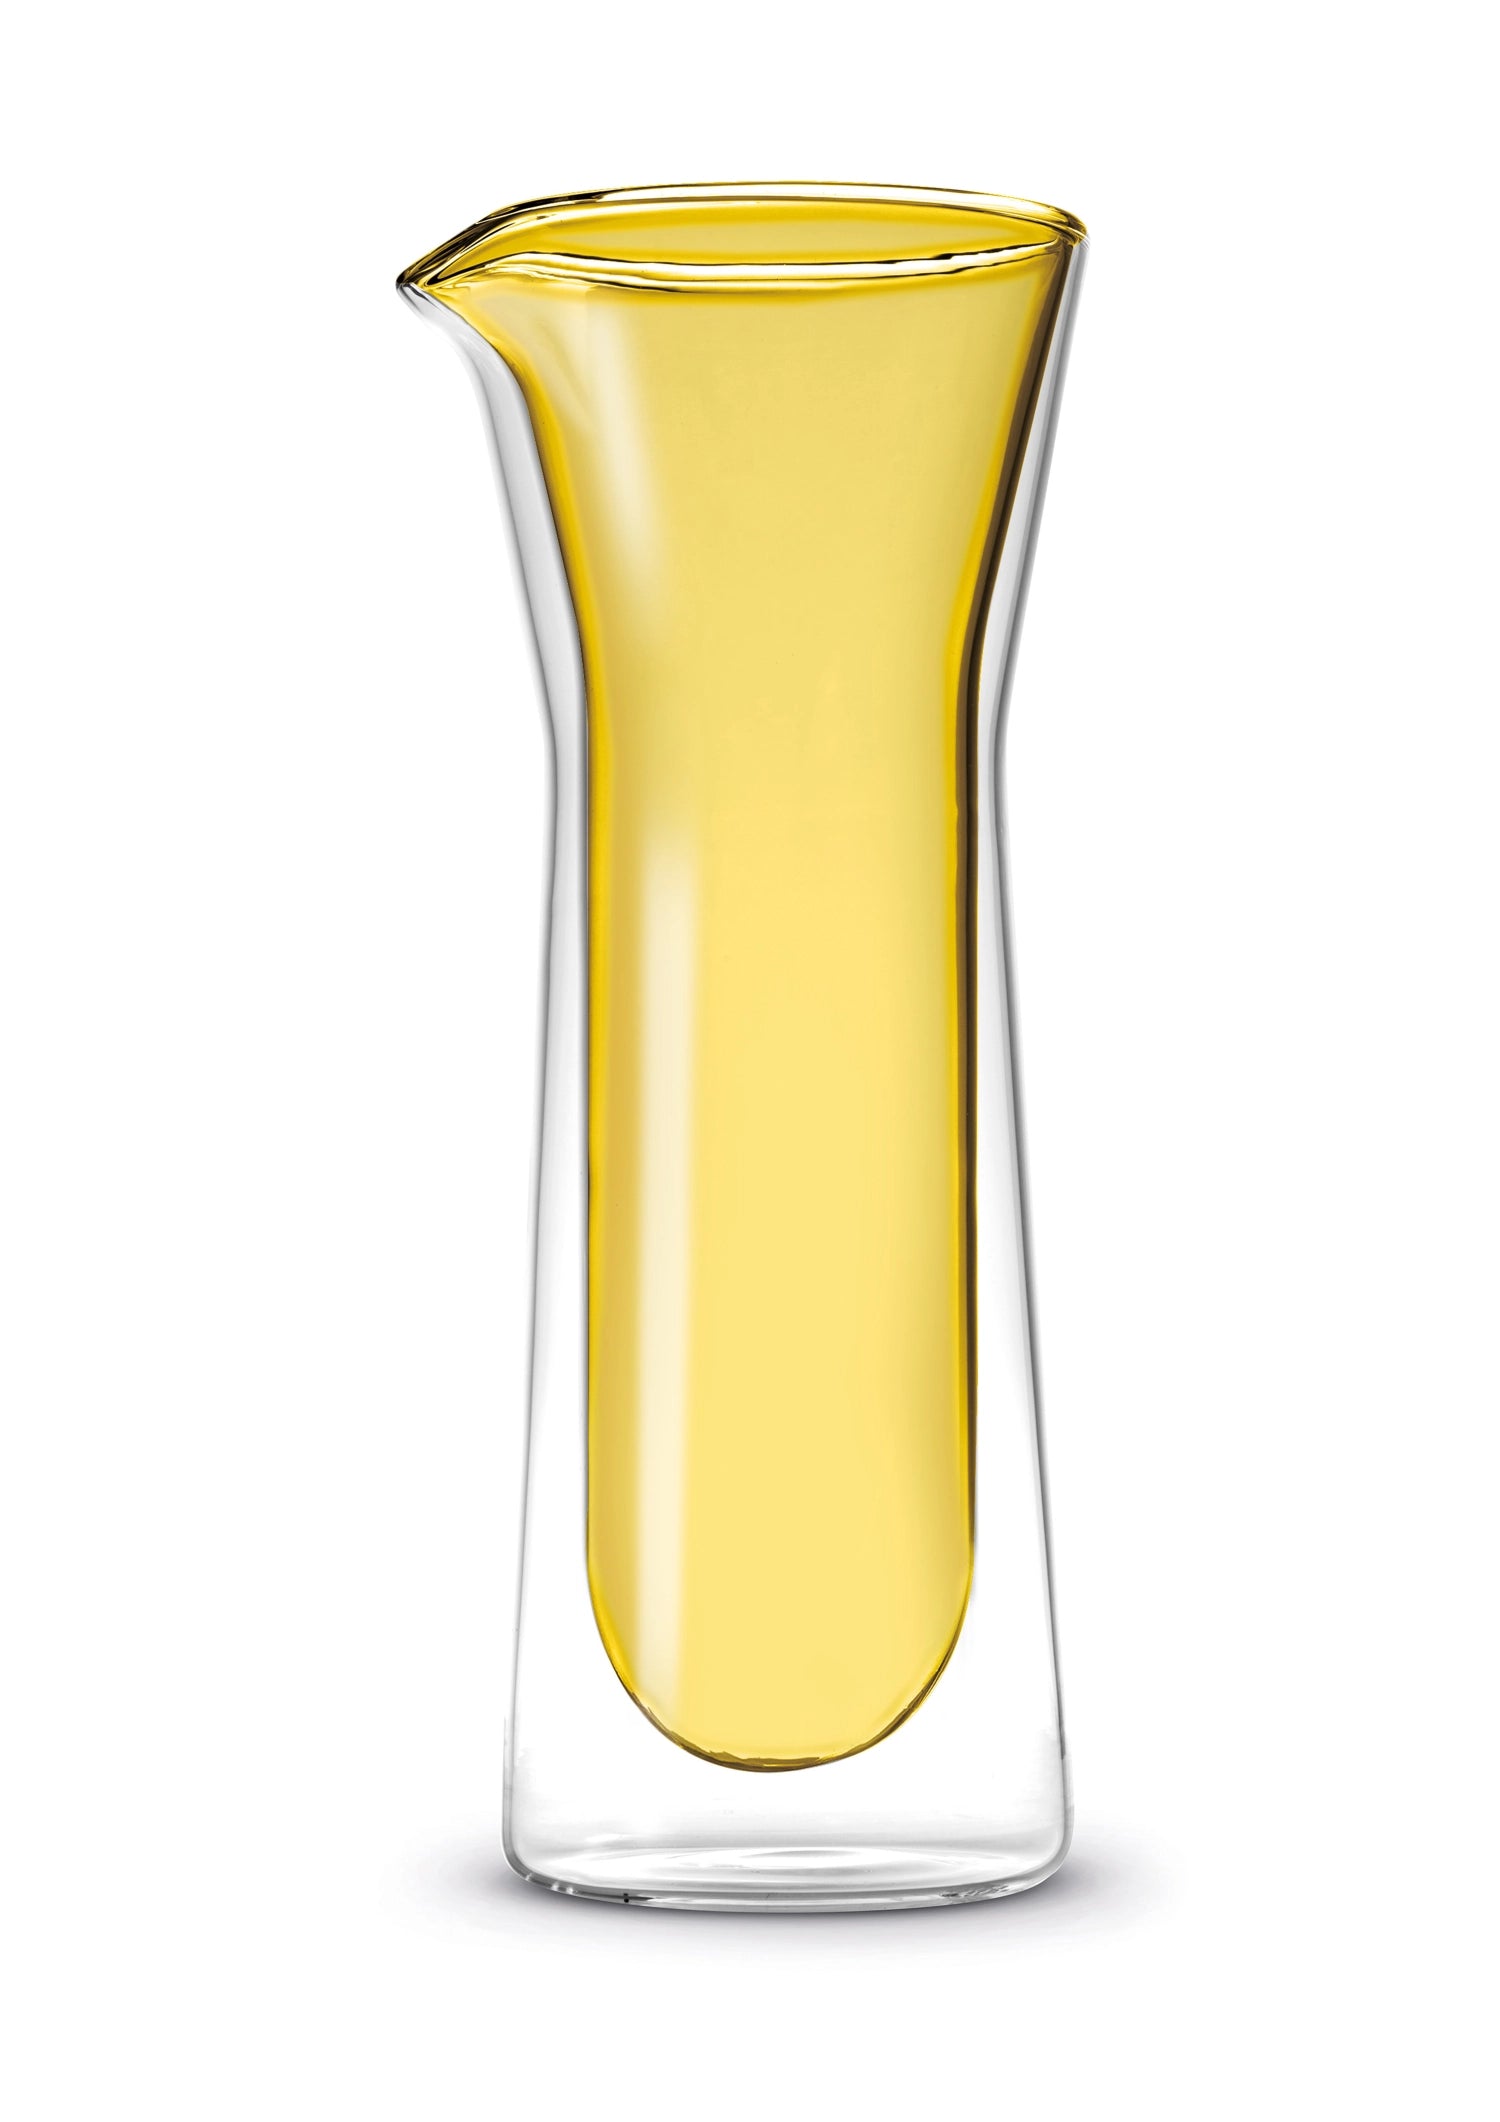 Glaskaraffe doppelw. gelb, 800ml - KAQTU Design